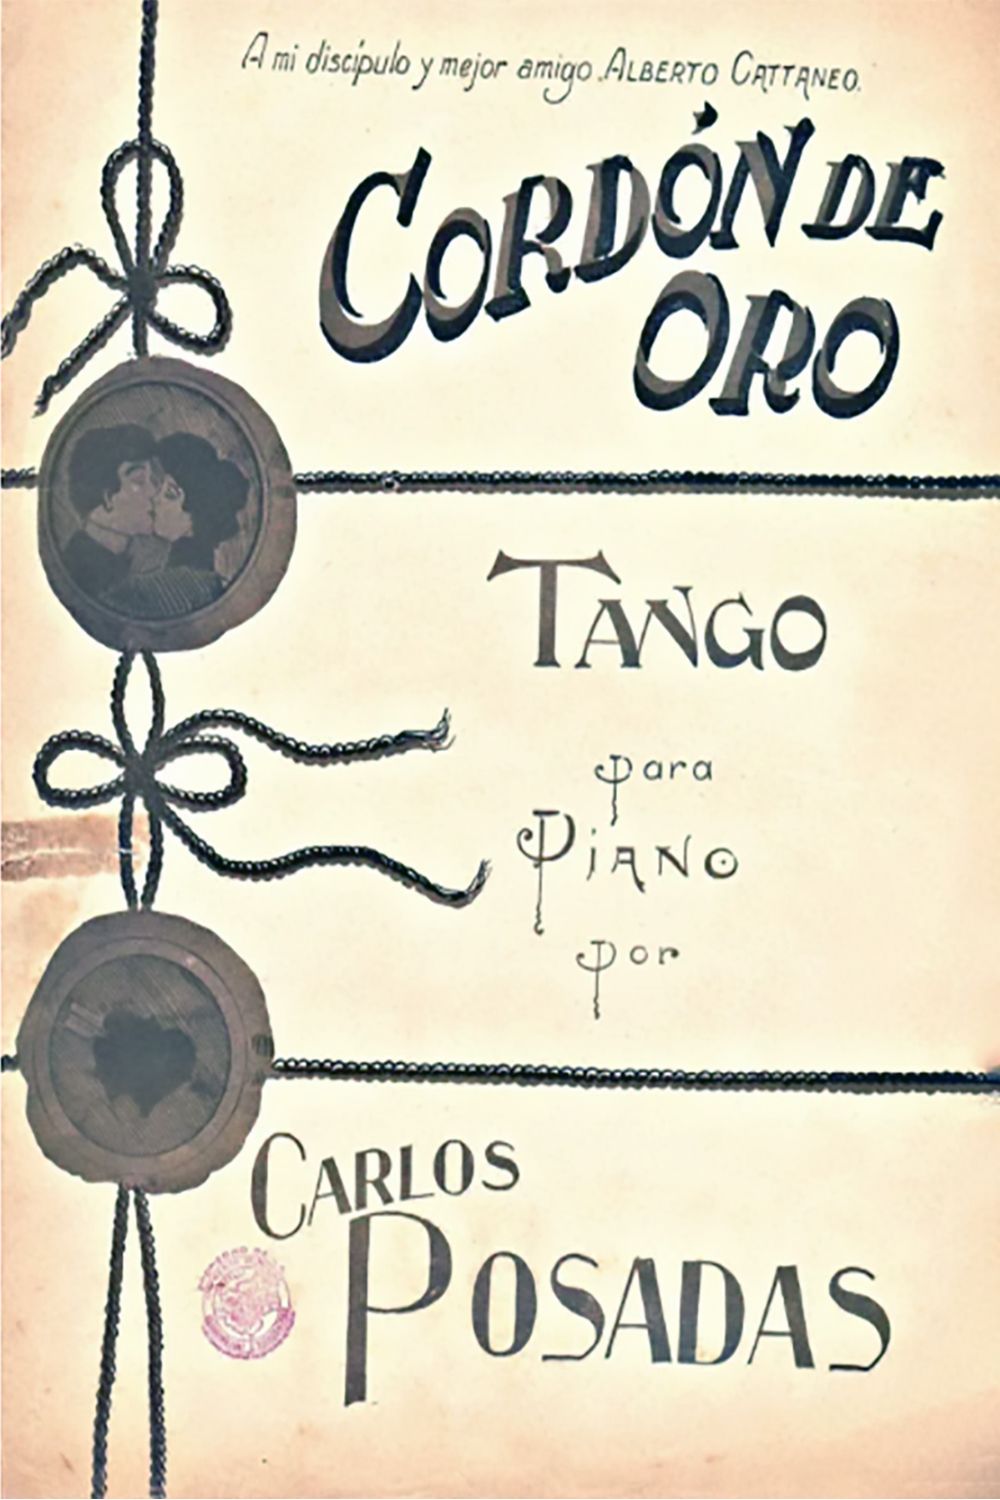 "Cordón de oro", tapa de la partitura musical del tango.